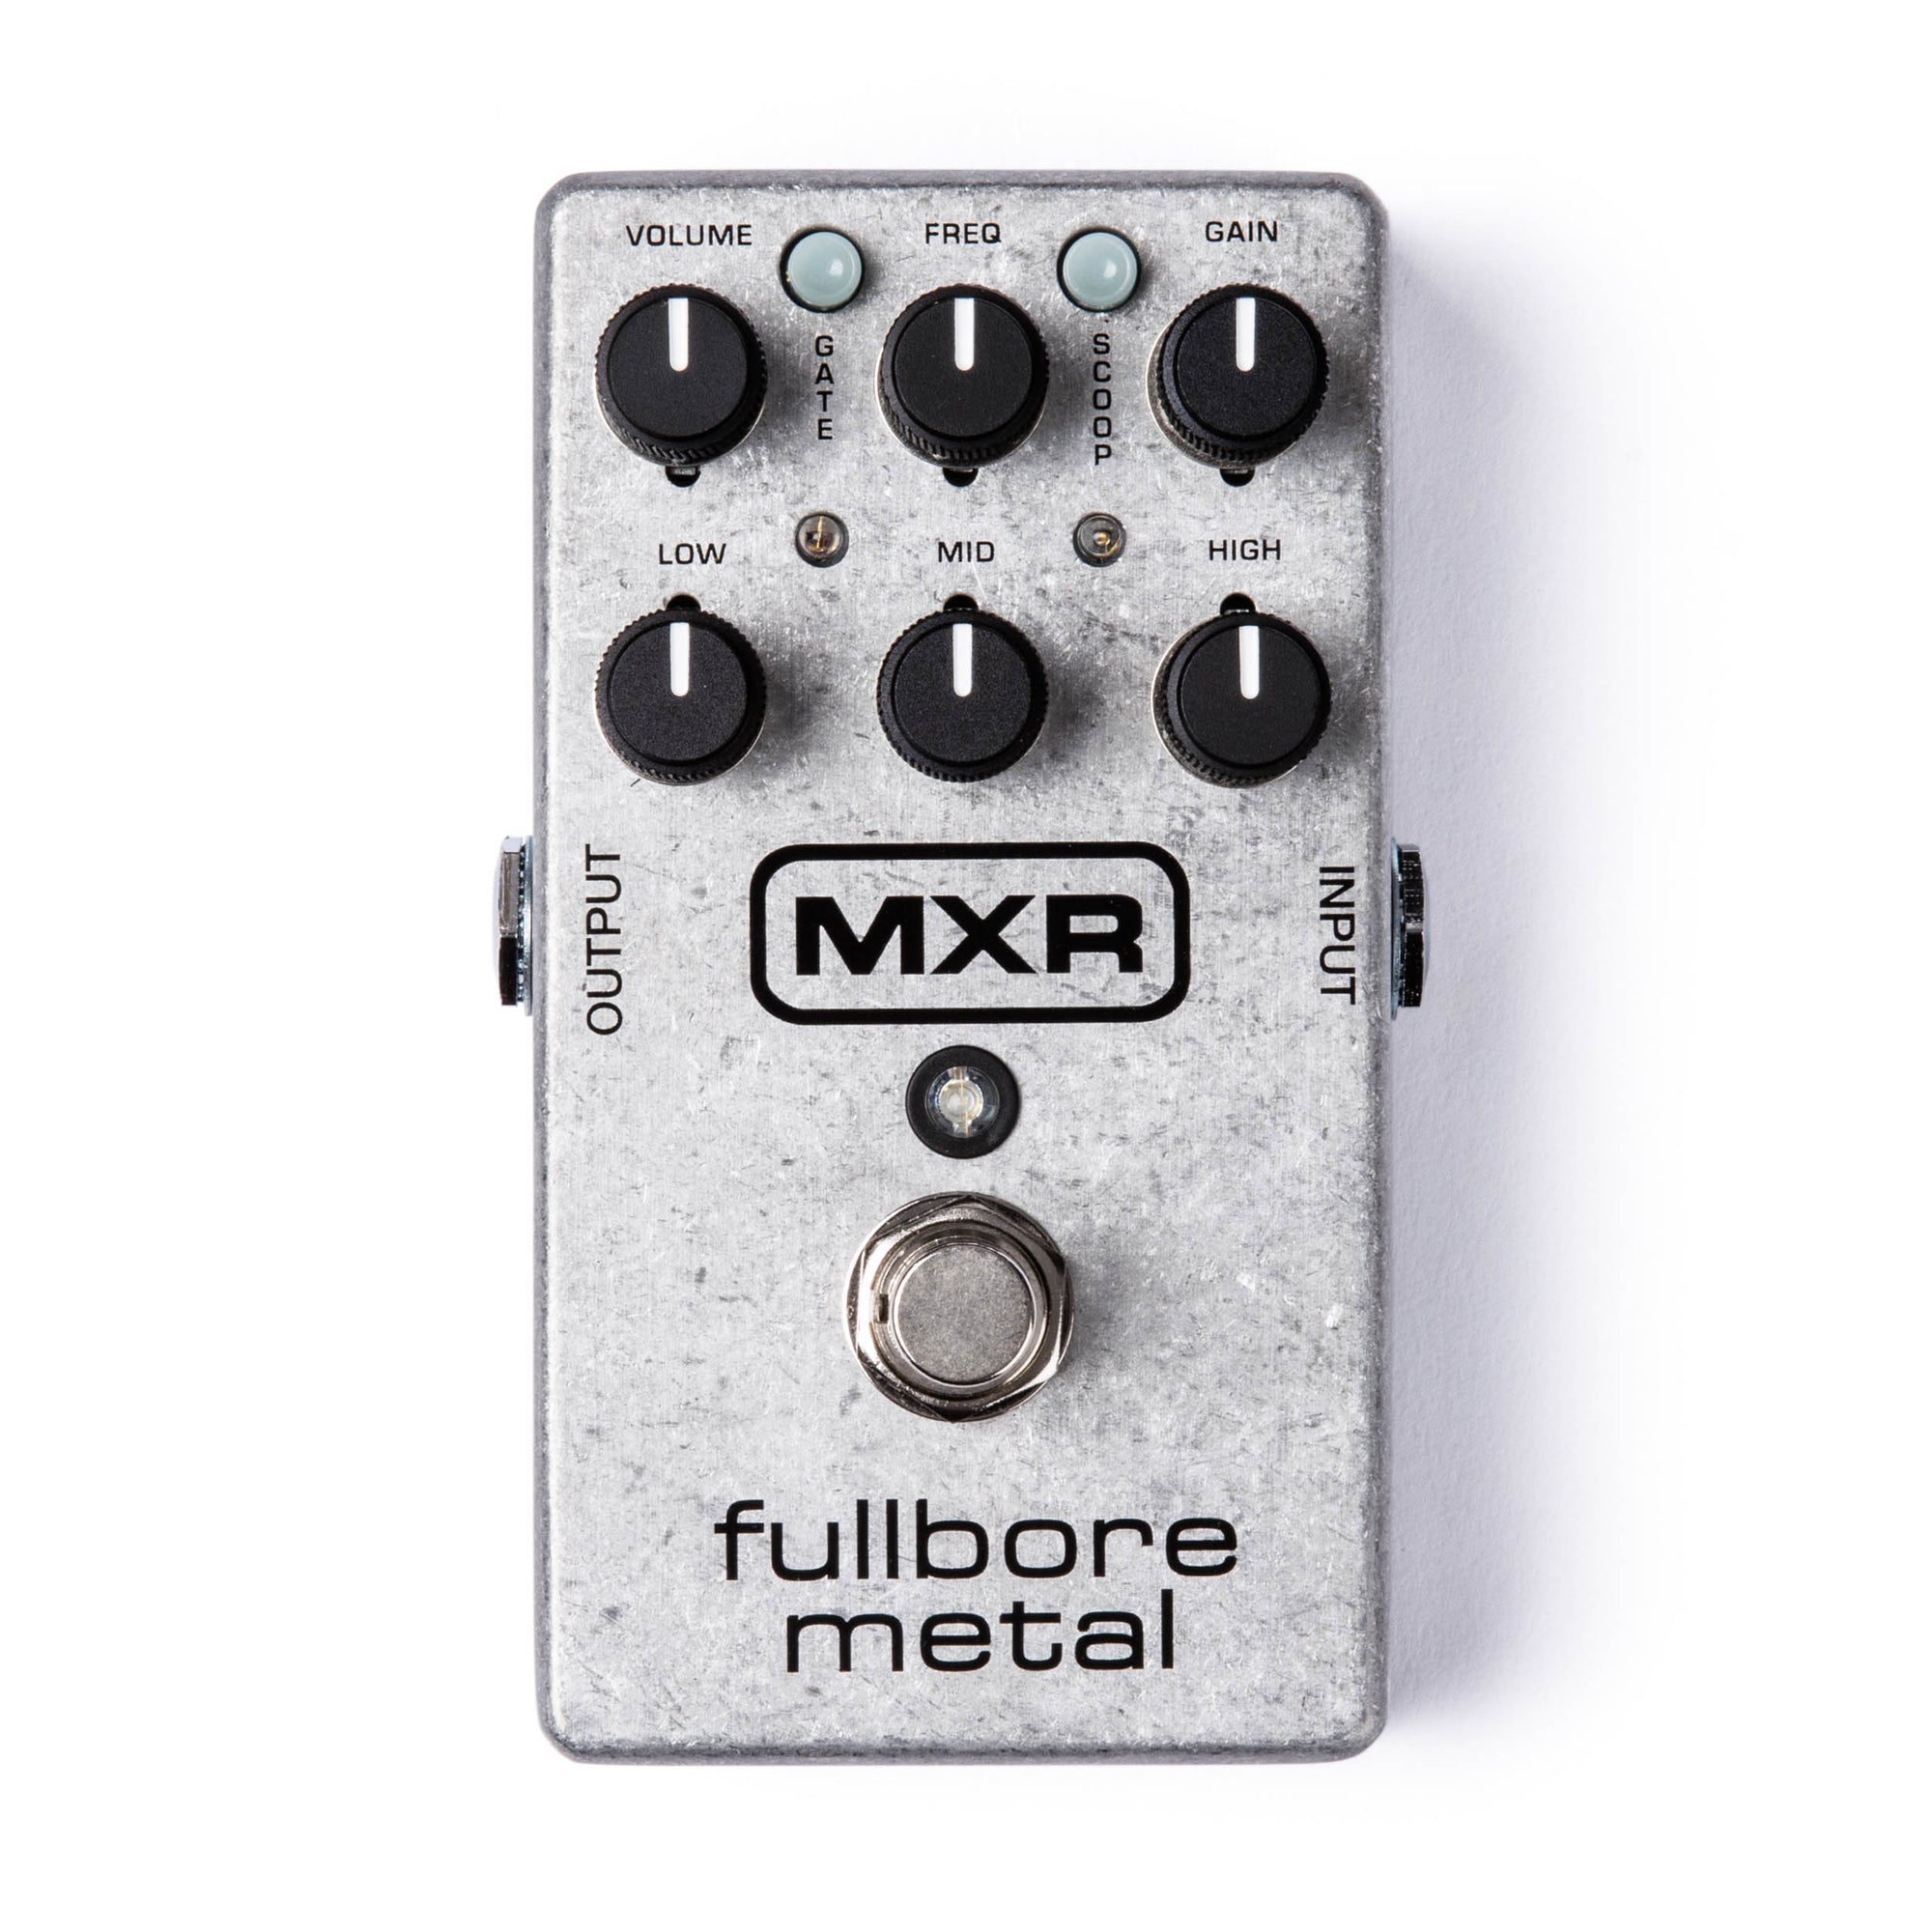 MXR Fullbore Metal Distortion